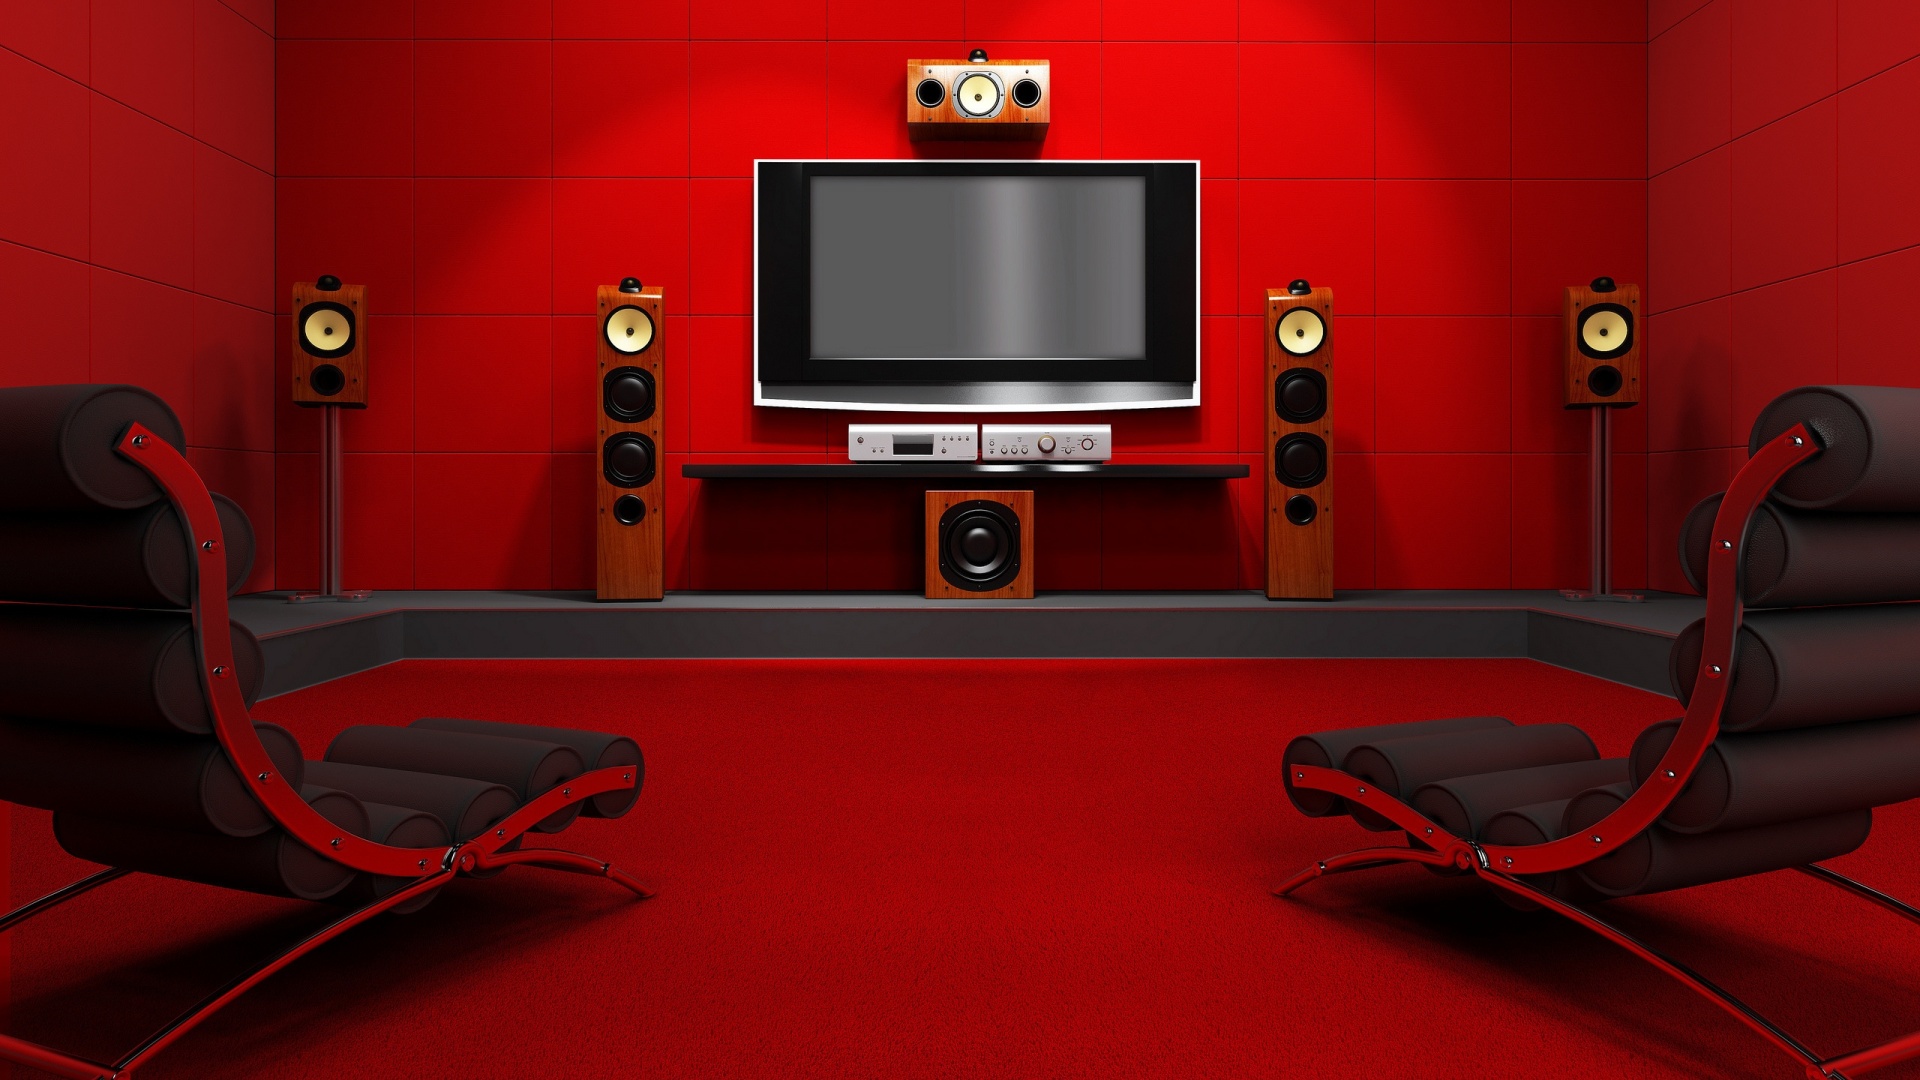 1920x1080 Red Room desktop PC and Mac wallpaper